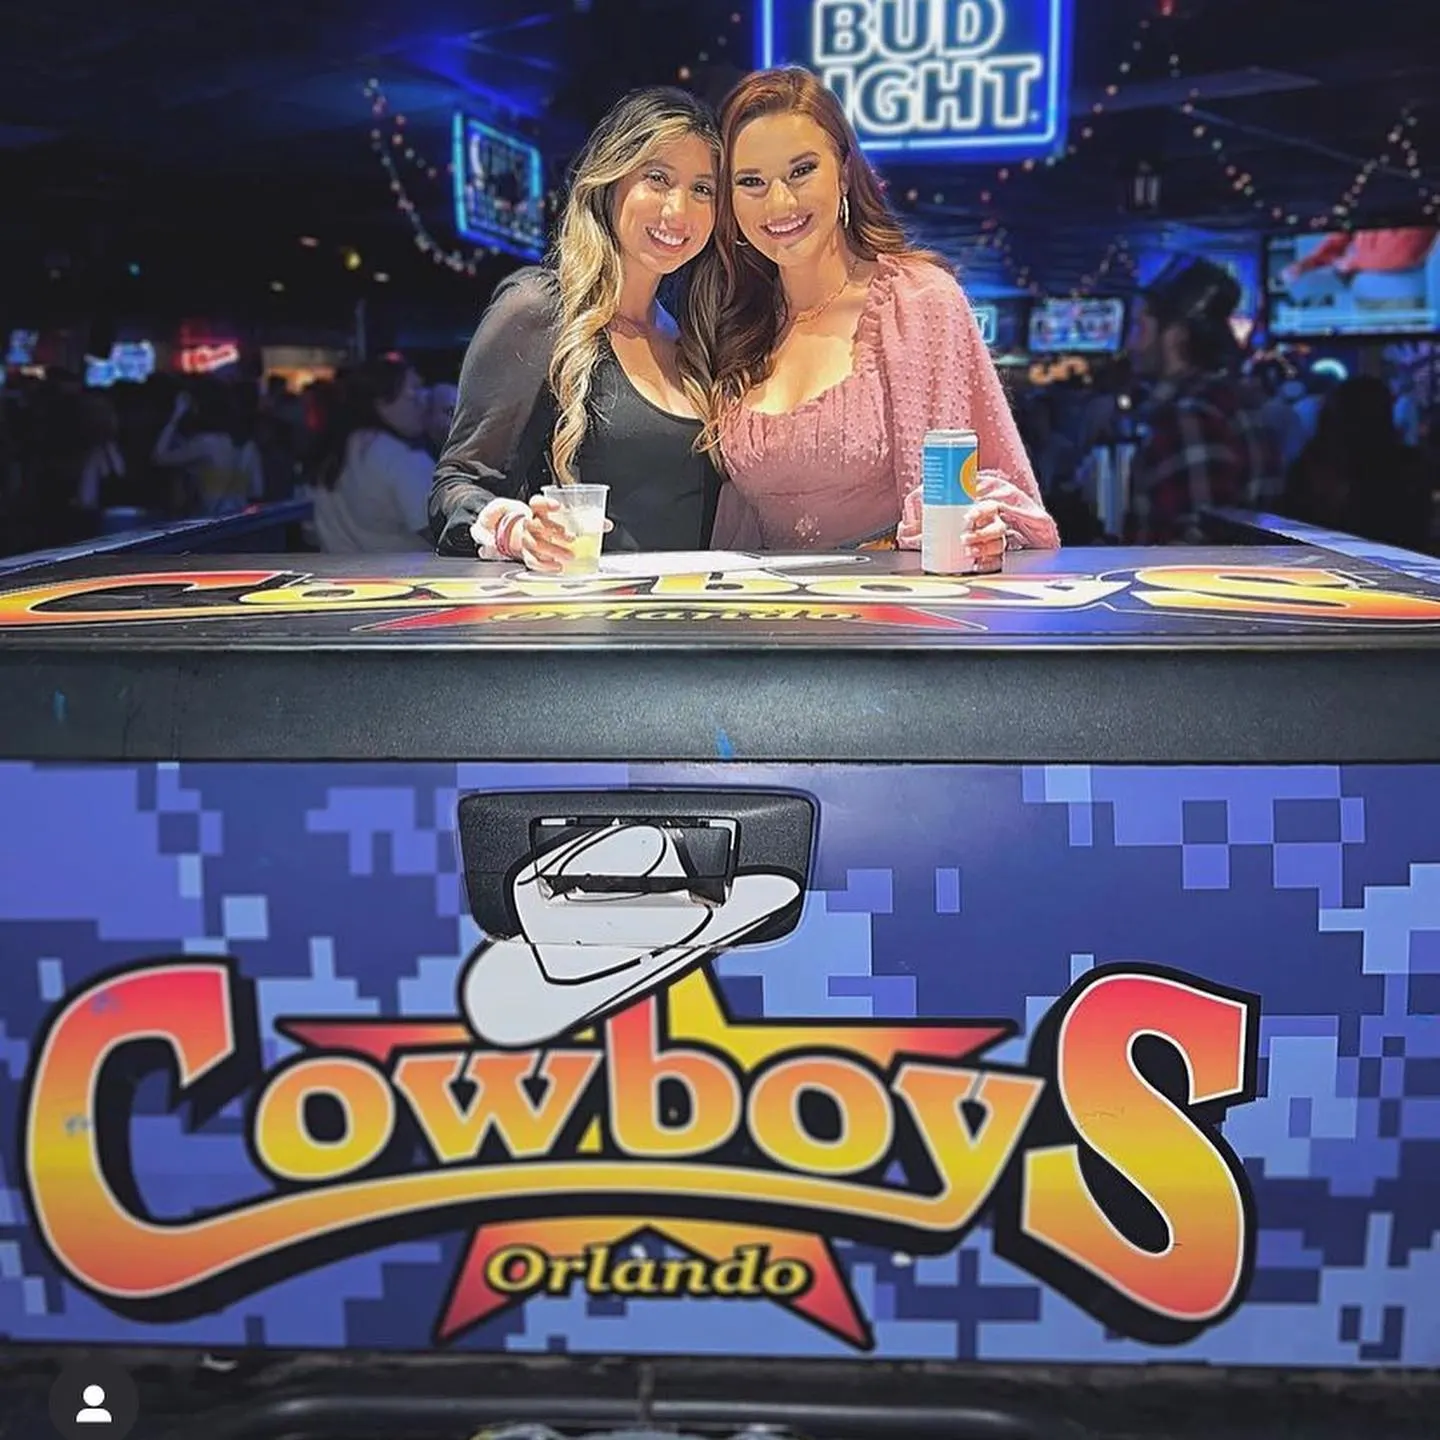 Cowboys Orlando, Orlando